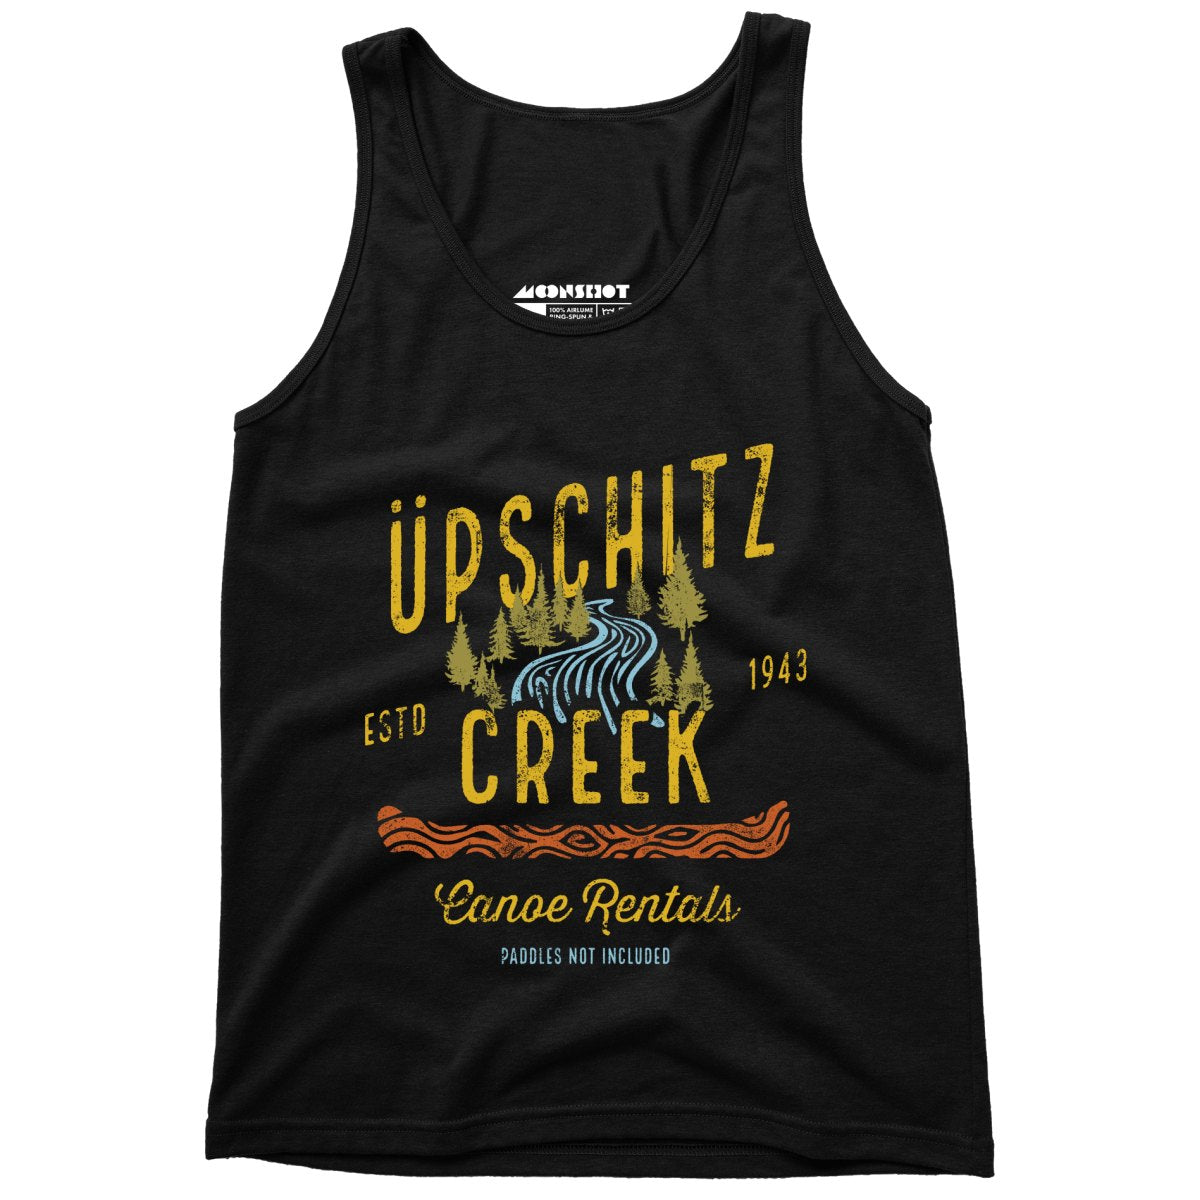 Upschitz Creek - Unisex Tank Top